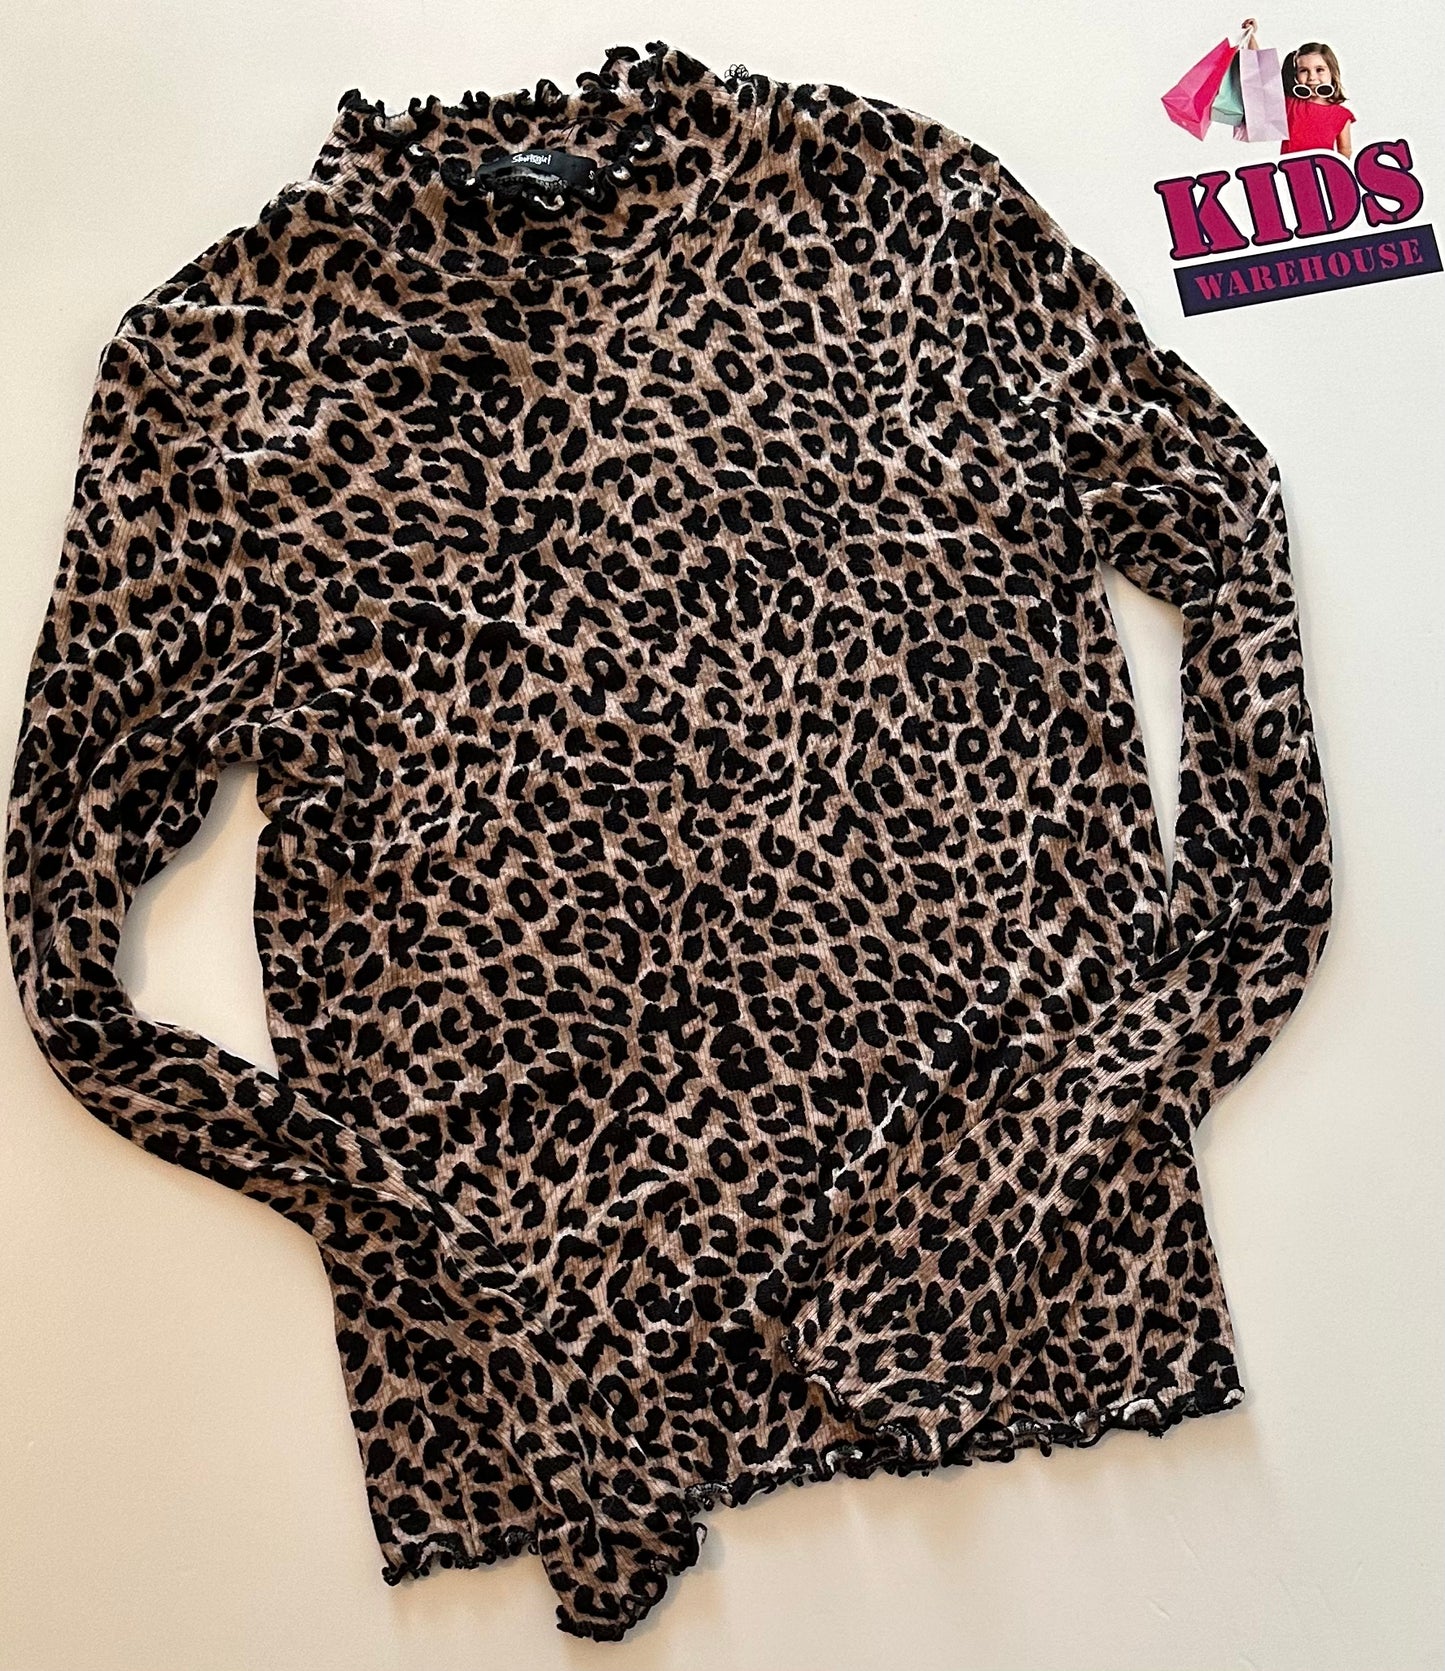 Sportsgirl Leopard Top Size Ladies S (14-16)